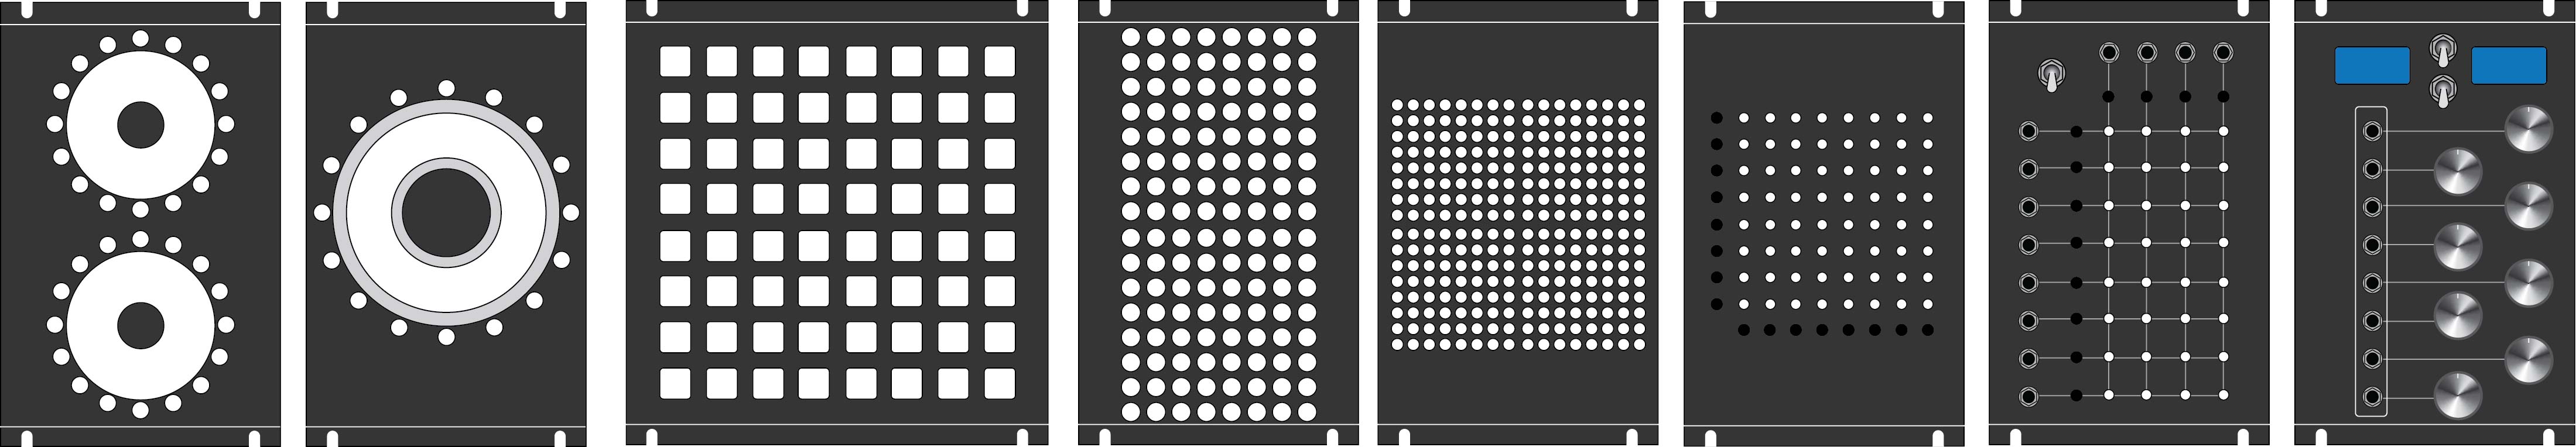 modulbox-panels2.jpg